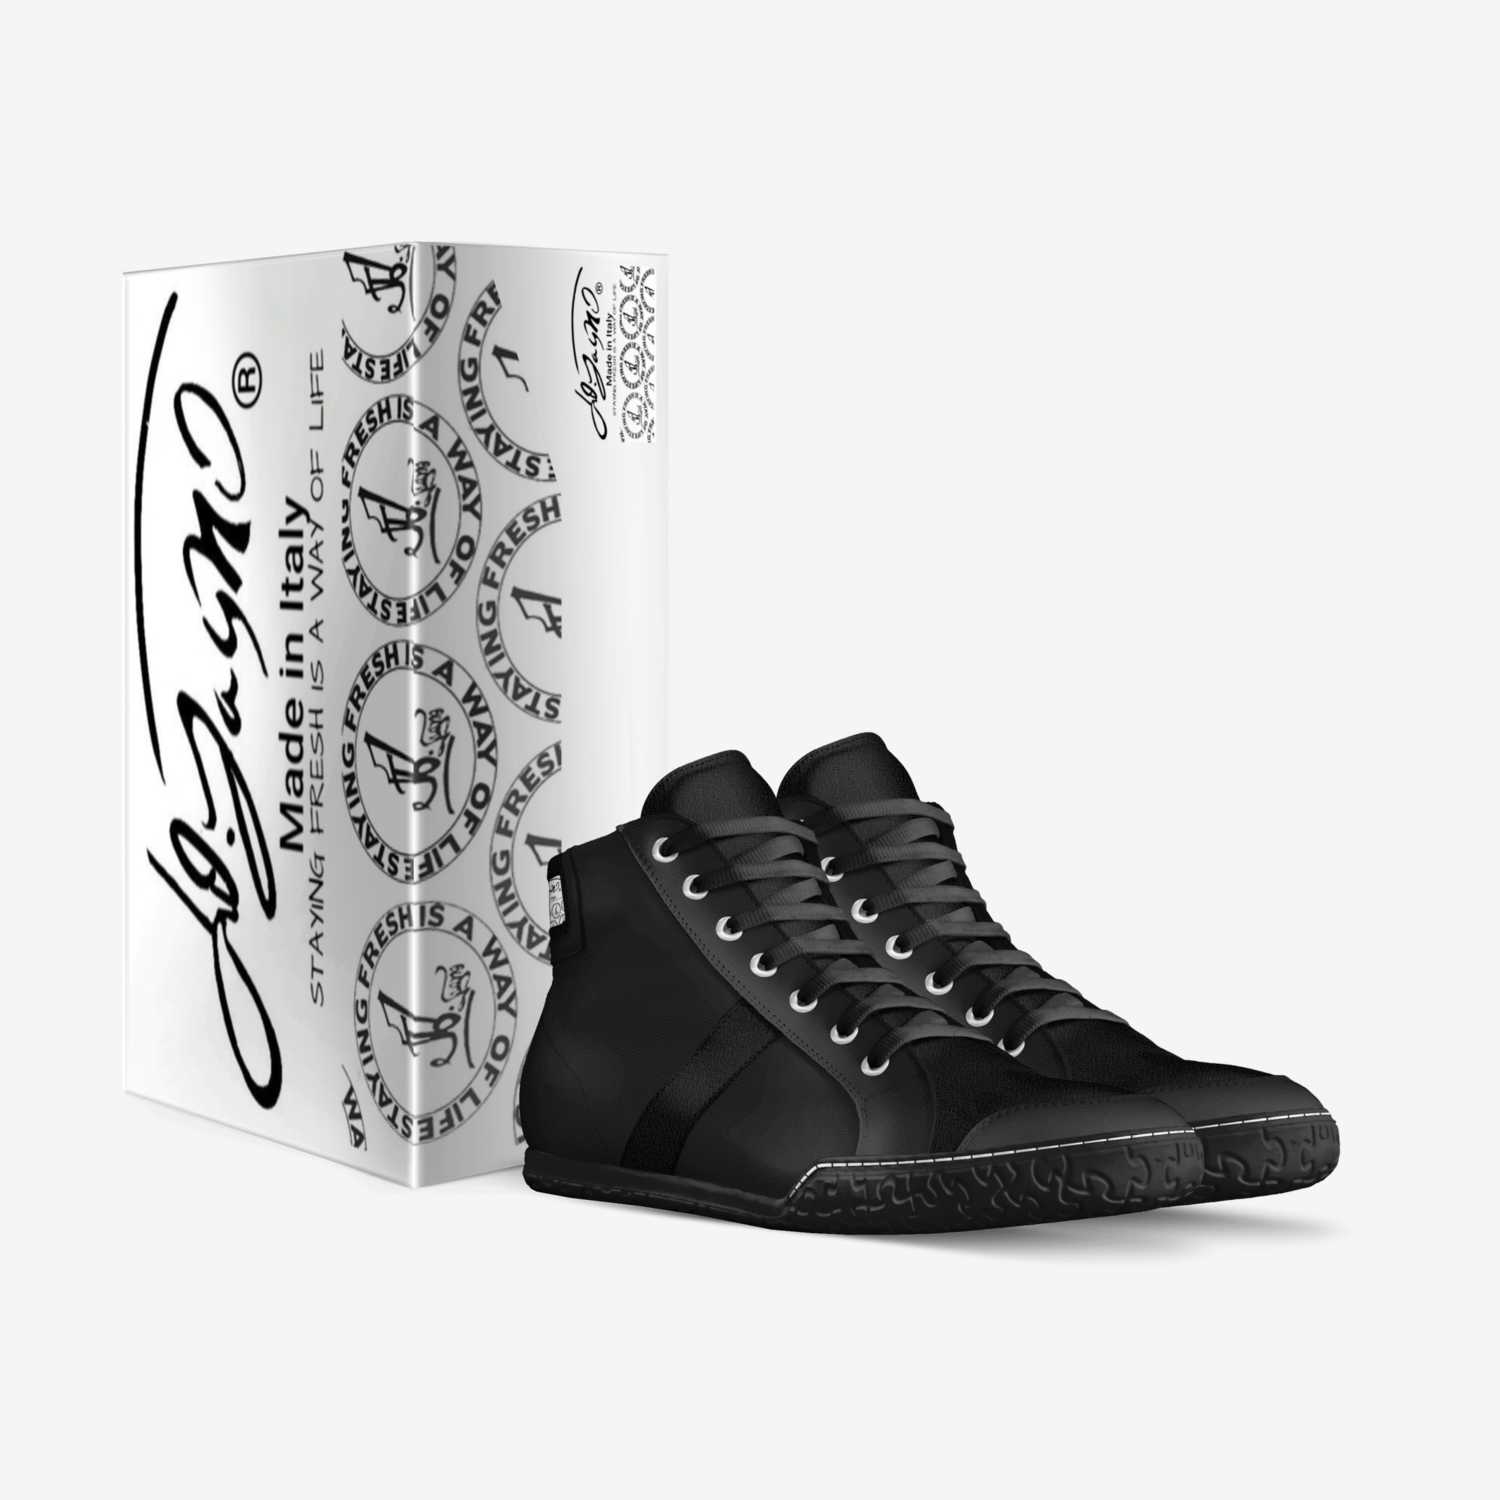 Jo.jayno  custom made in Italy shoes by Jo Jayno | Box view